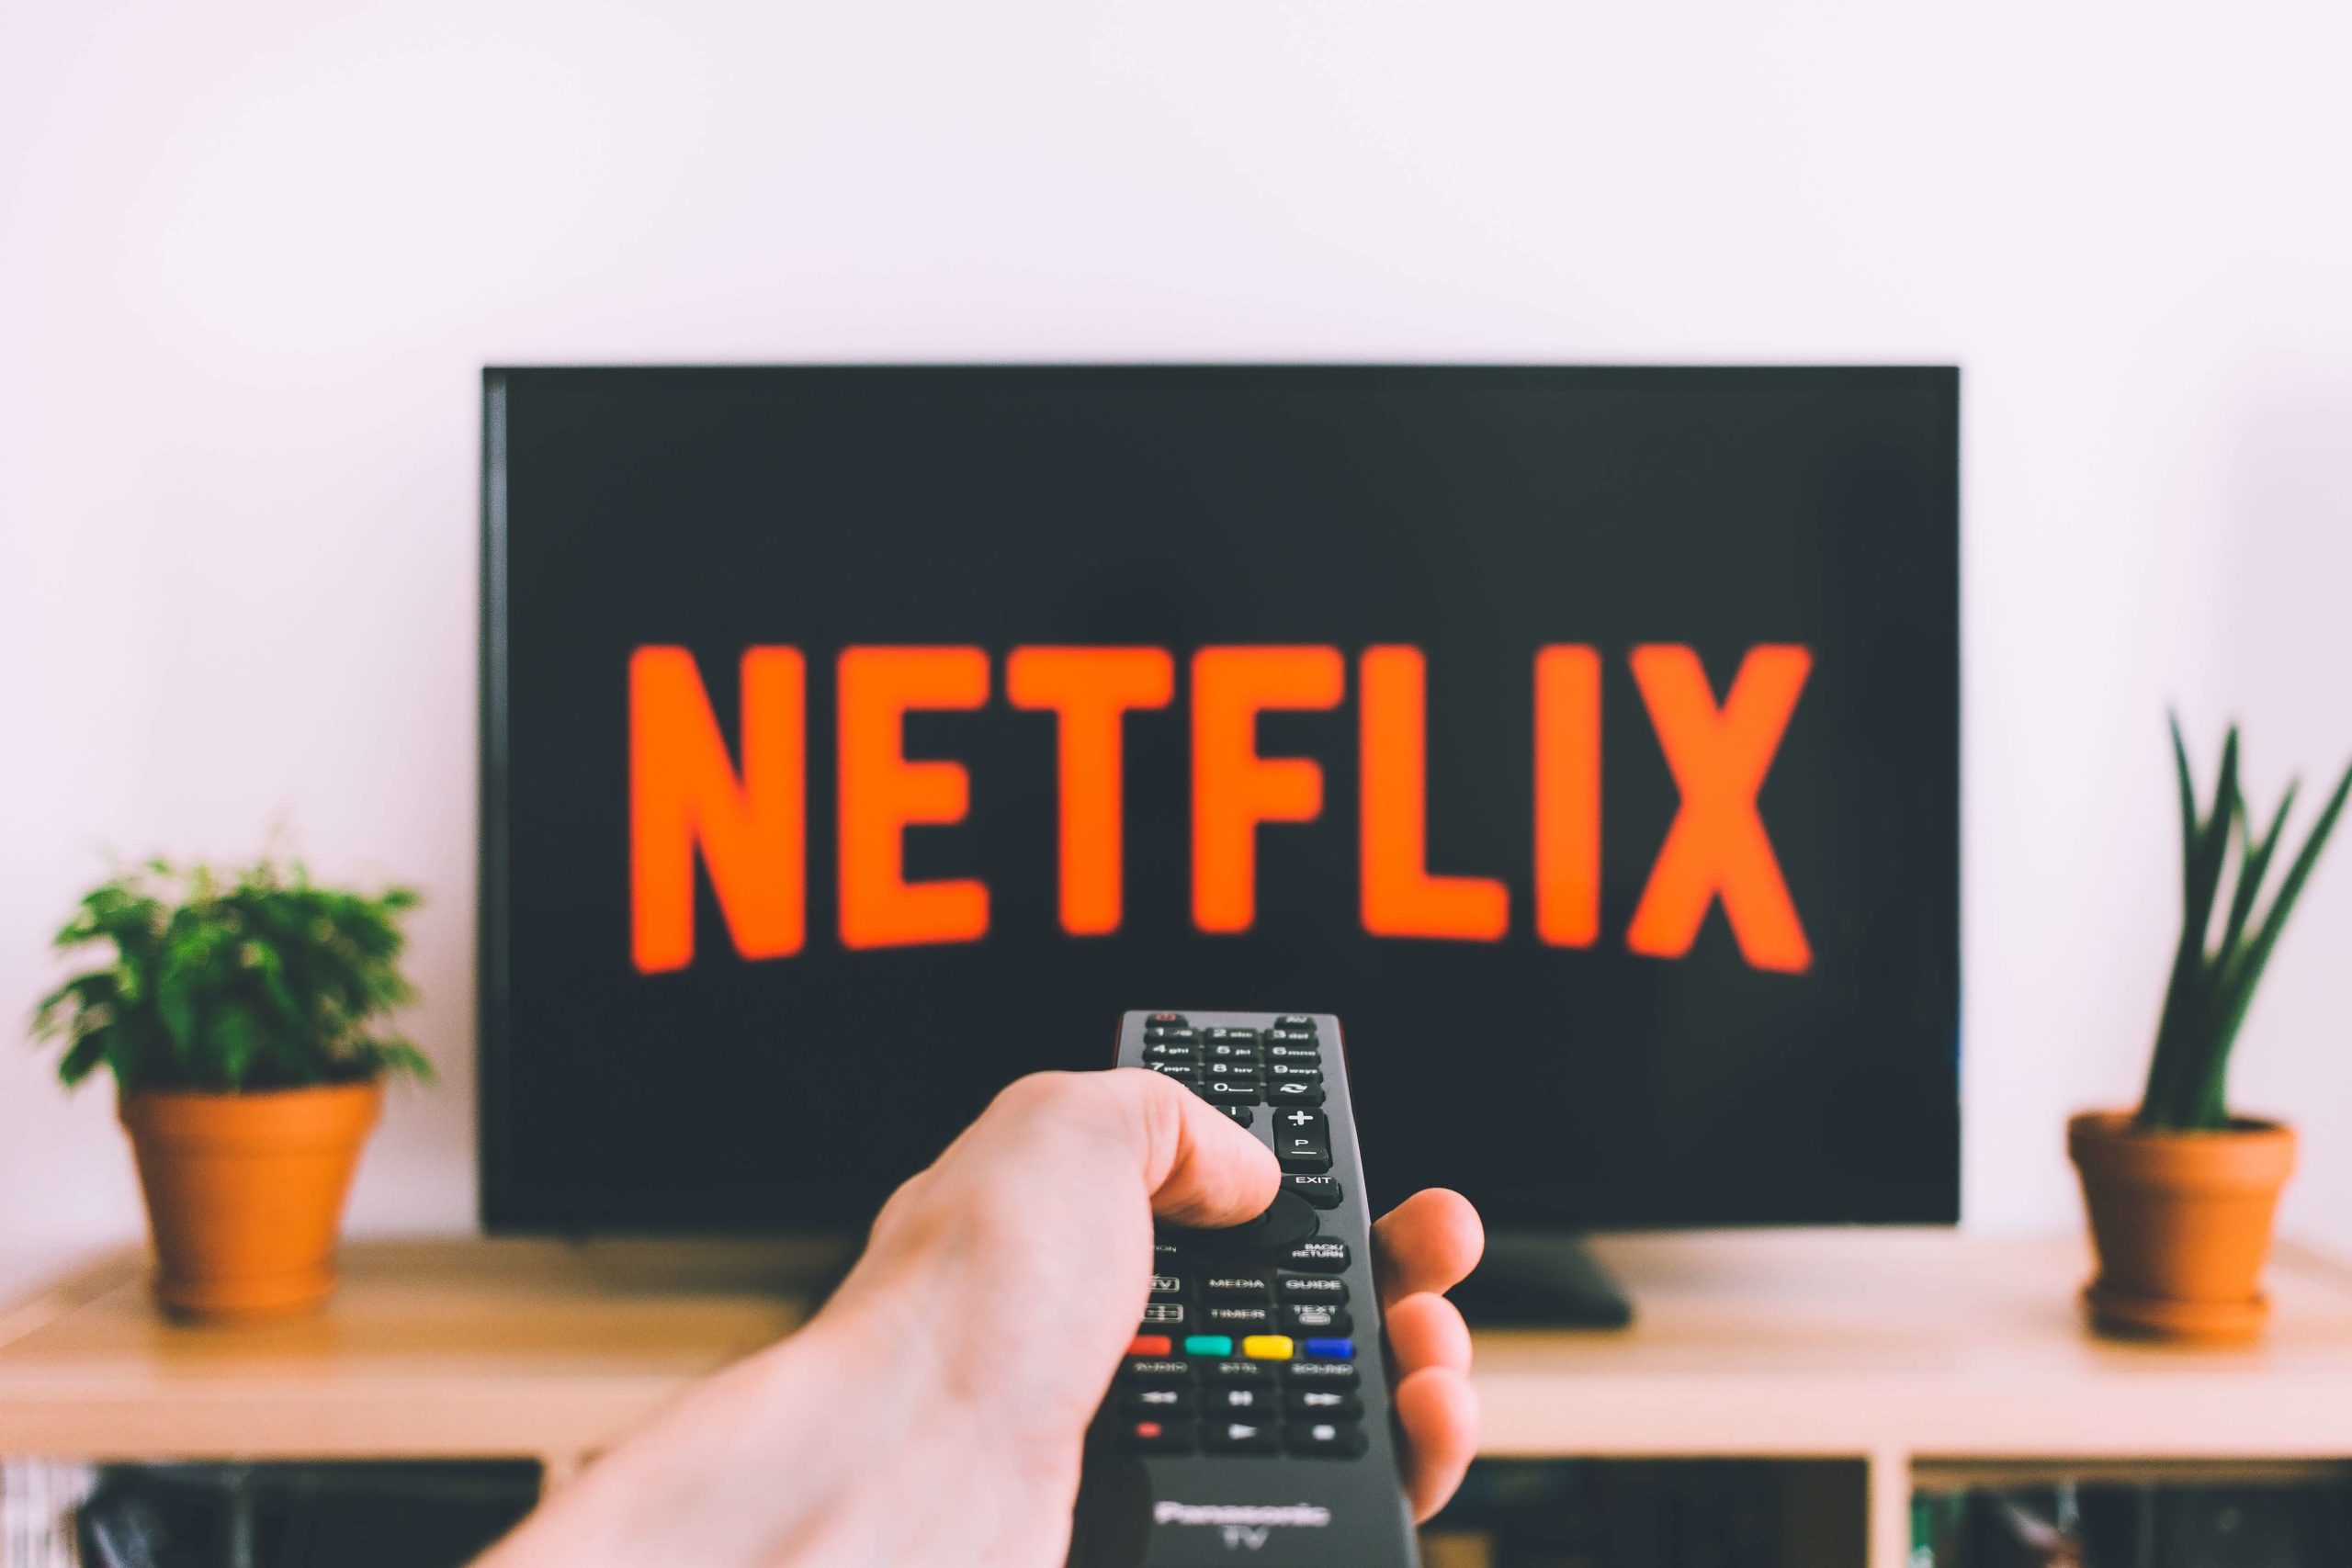 Netflix paid TV service